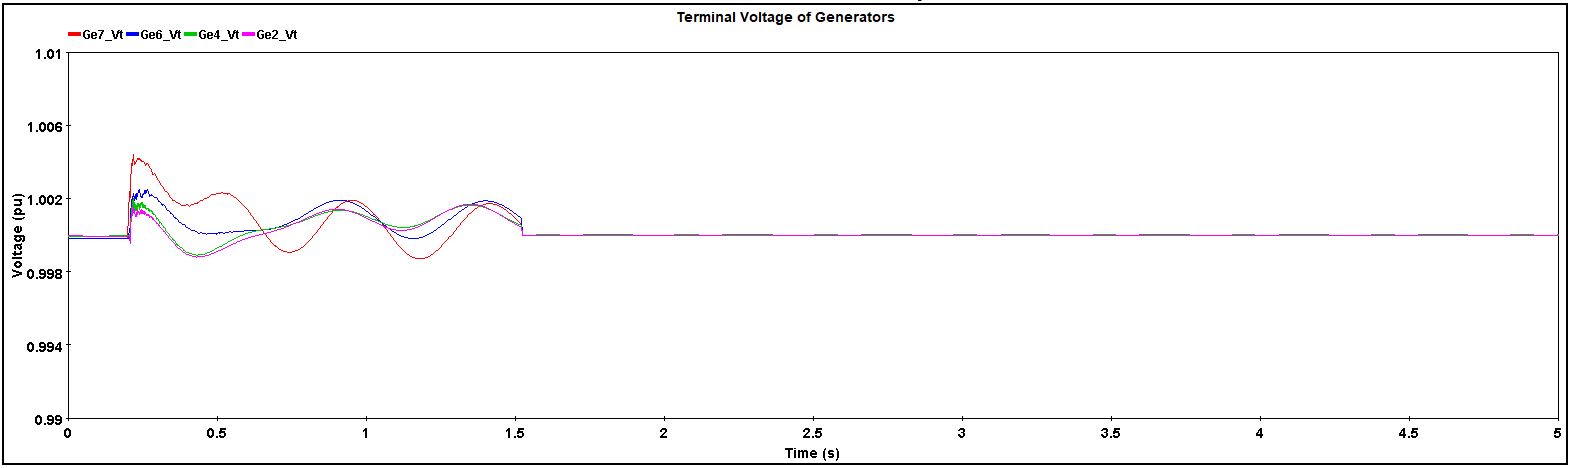 Terminal Voltage of Generators